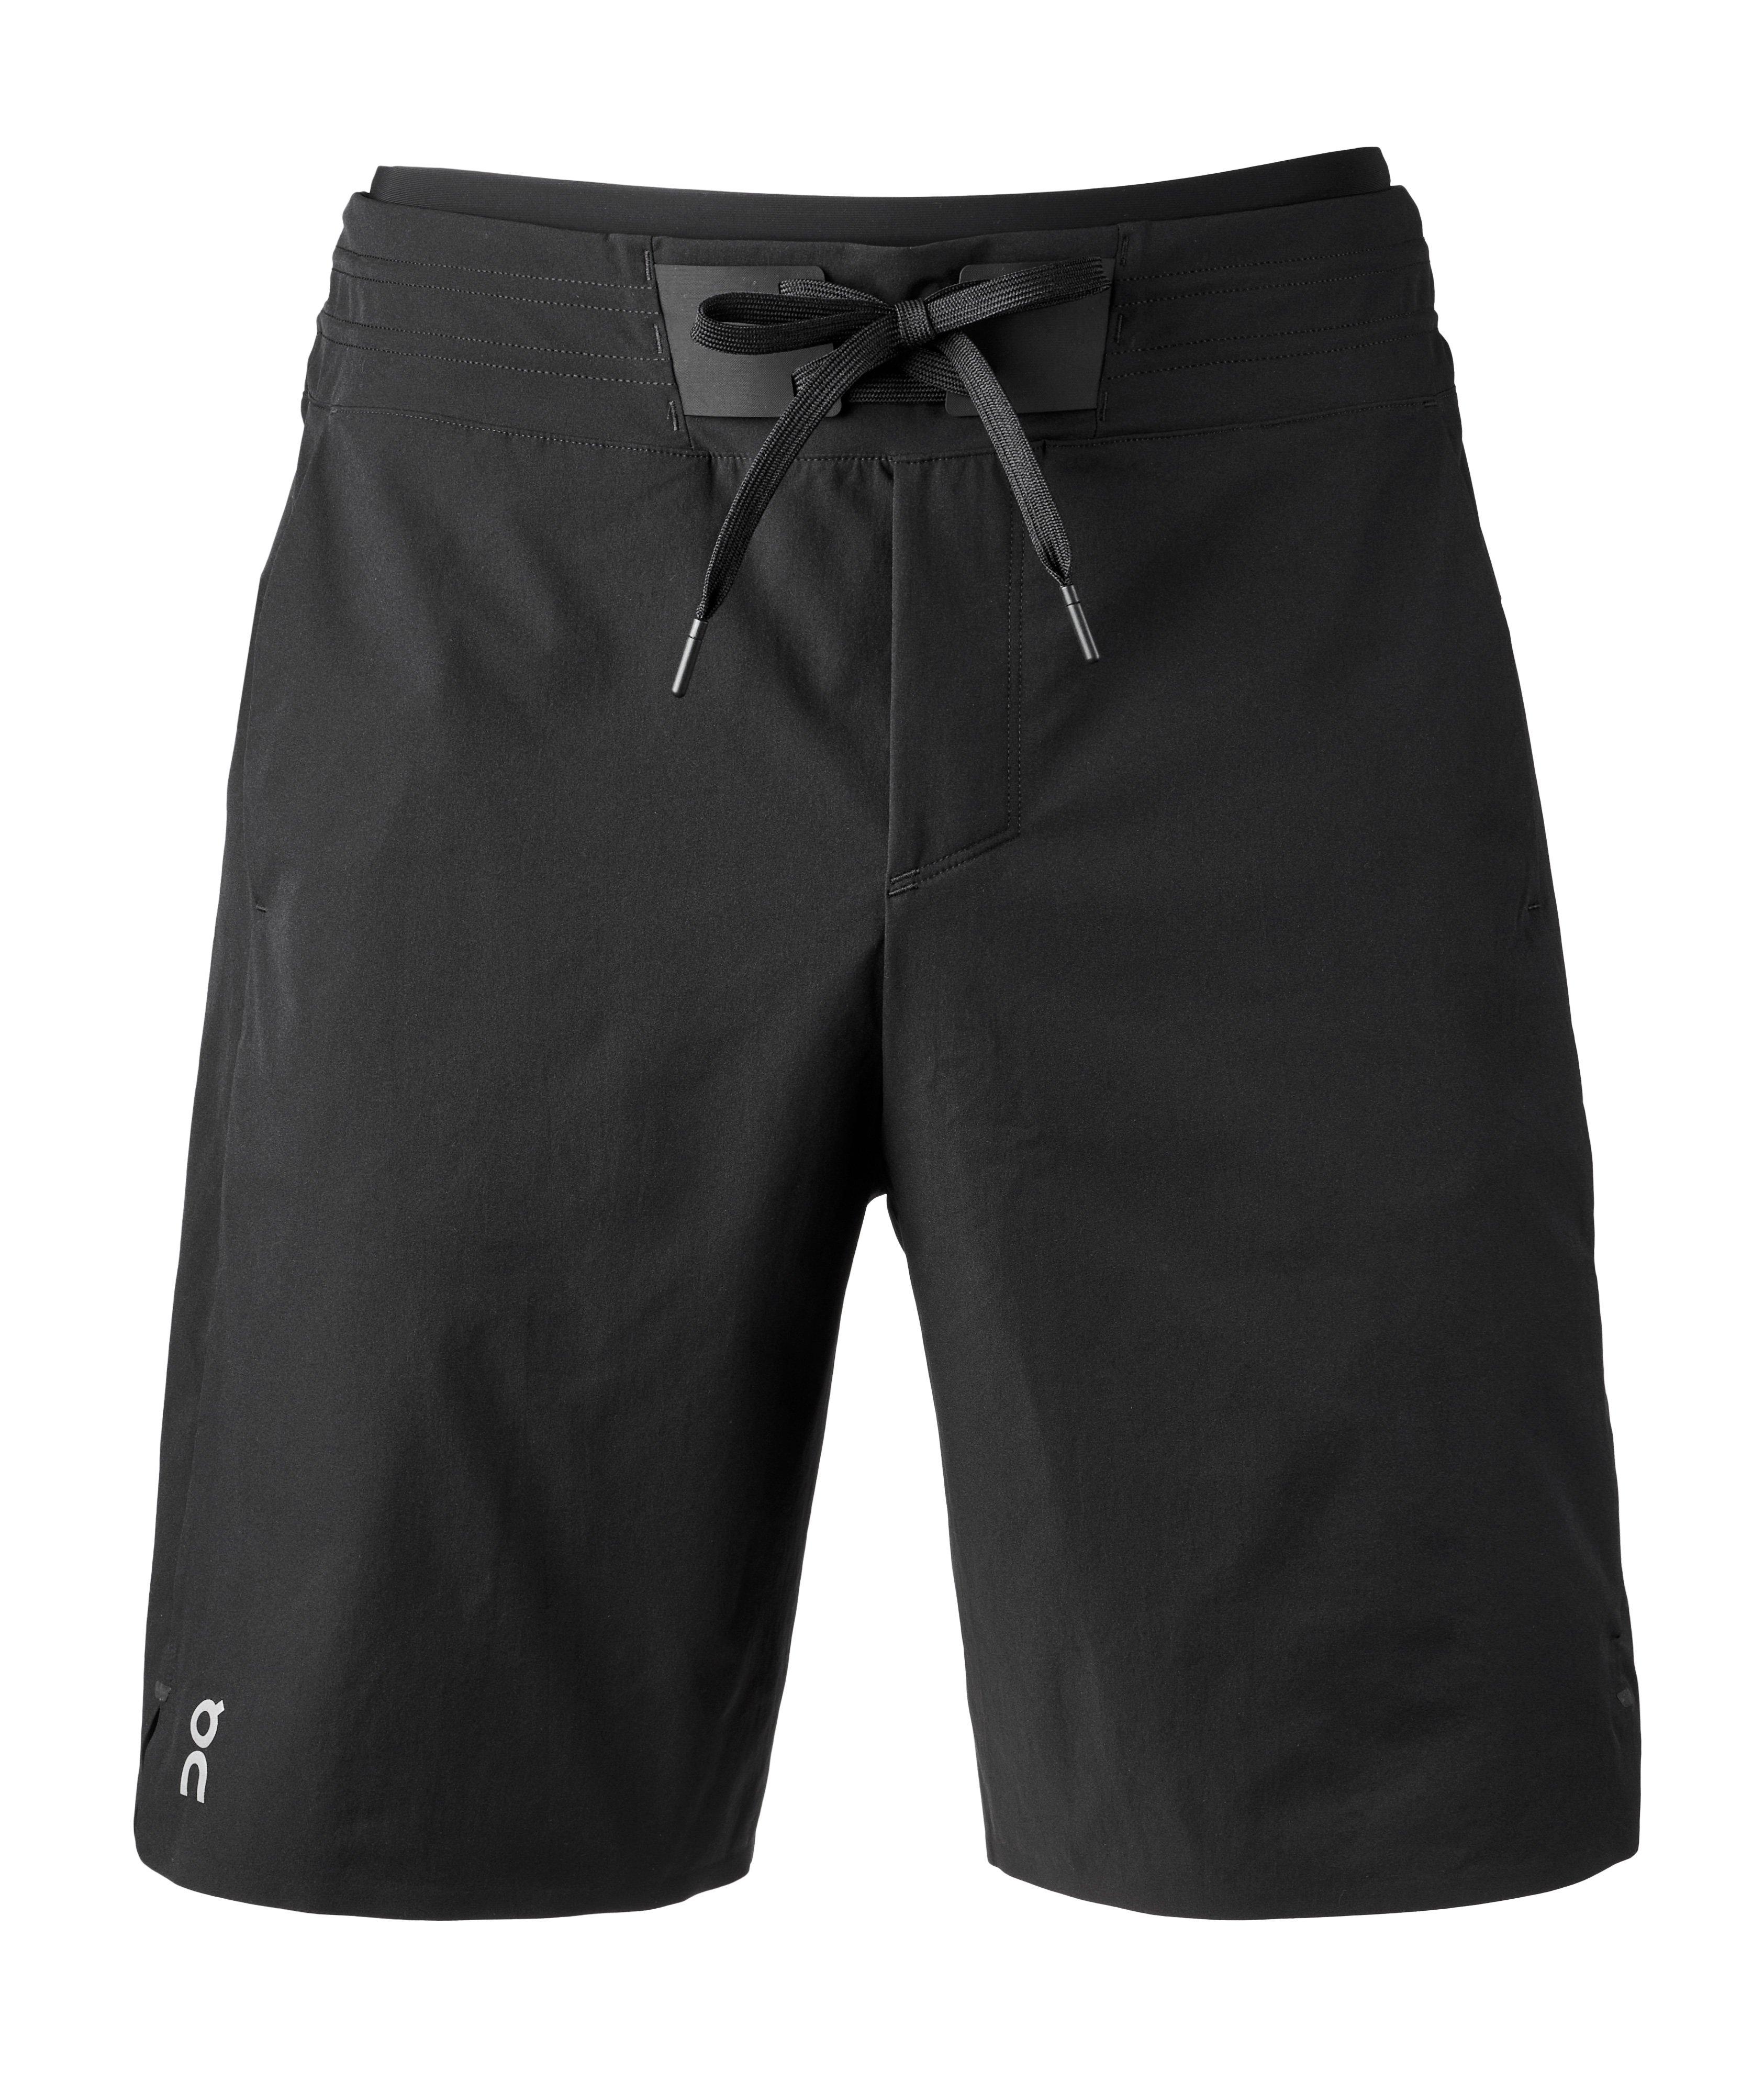 Three-in-One Hybrid Shorts image 0